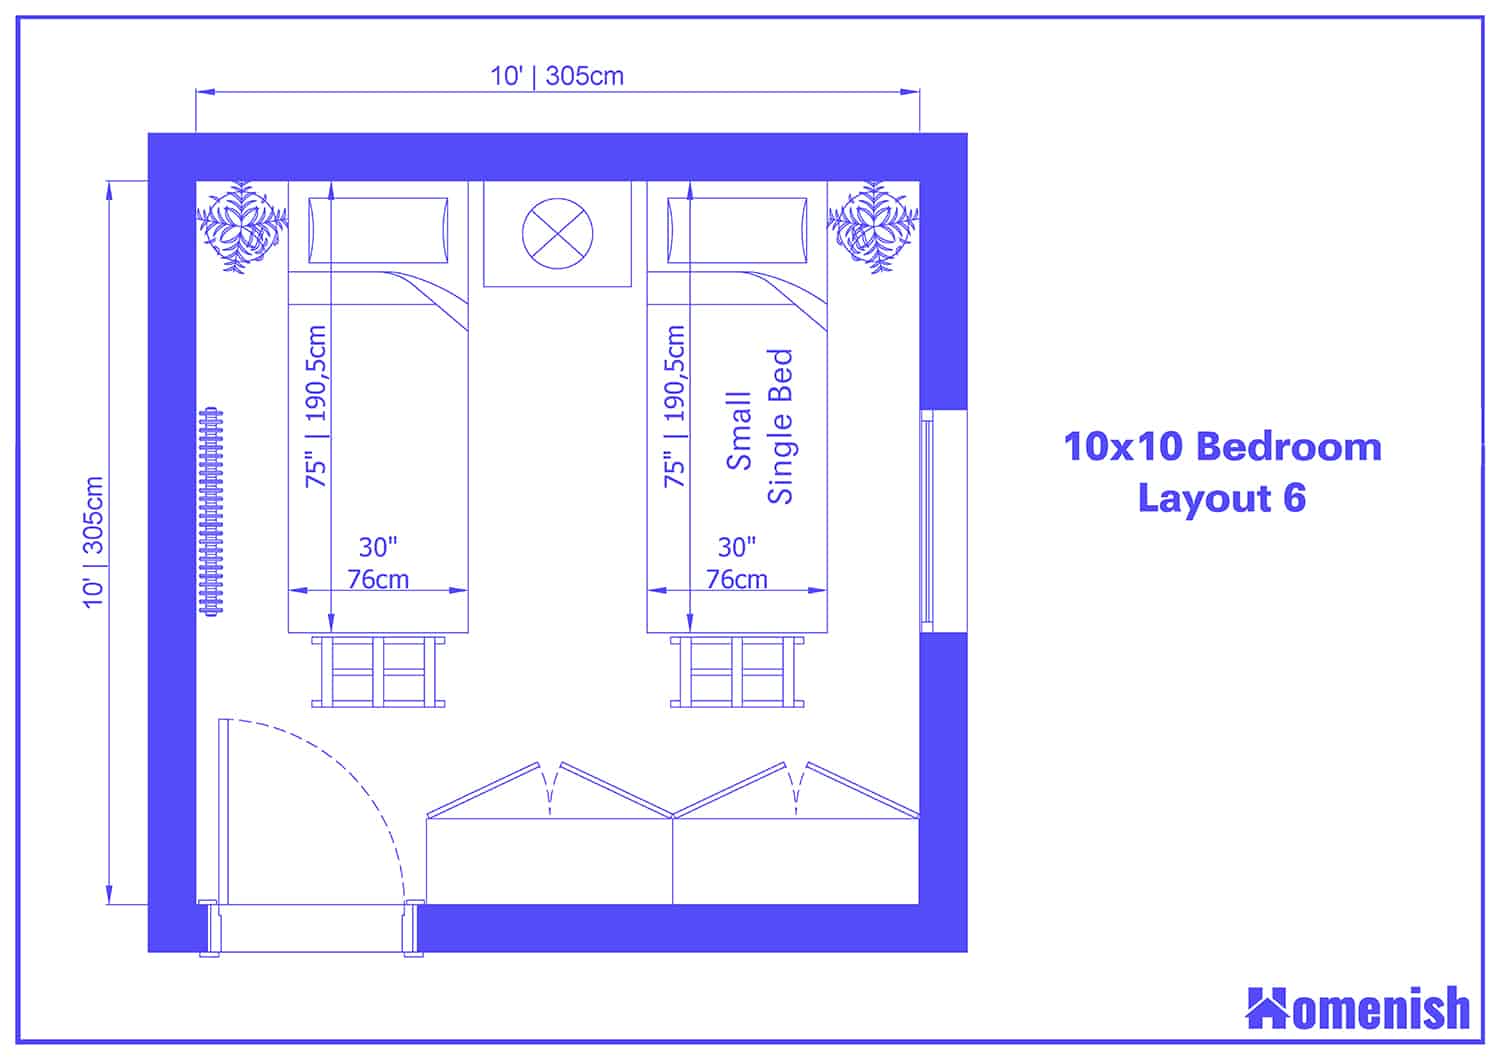 10x10 Bedroom Layout 6